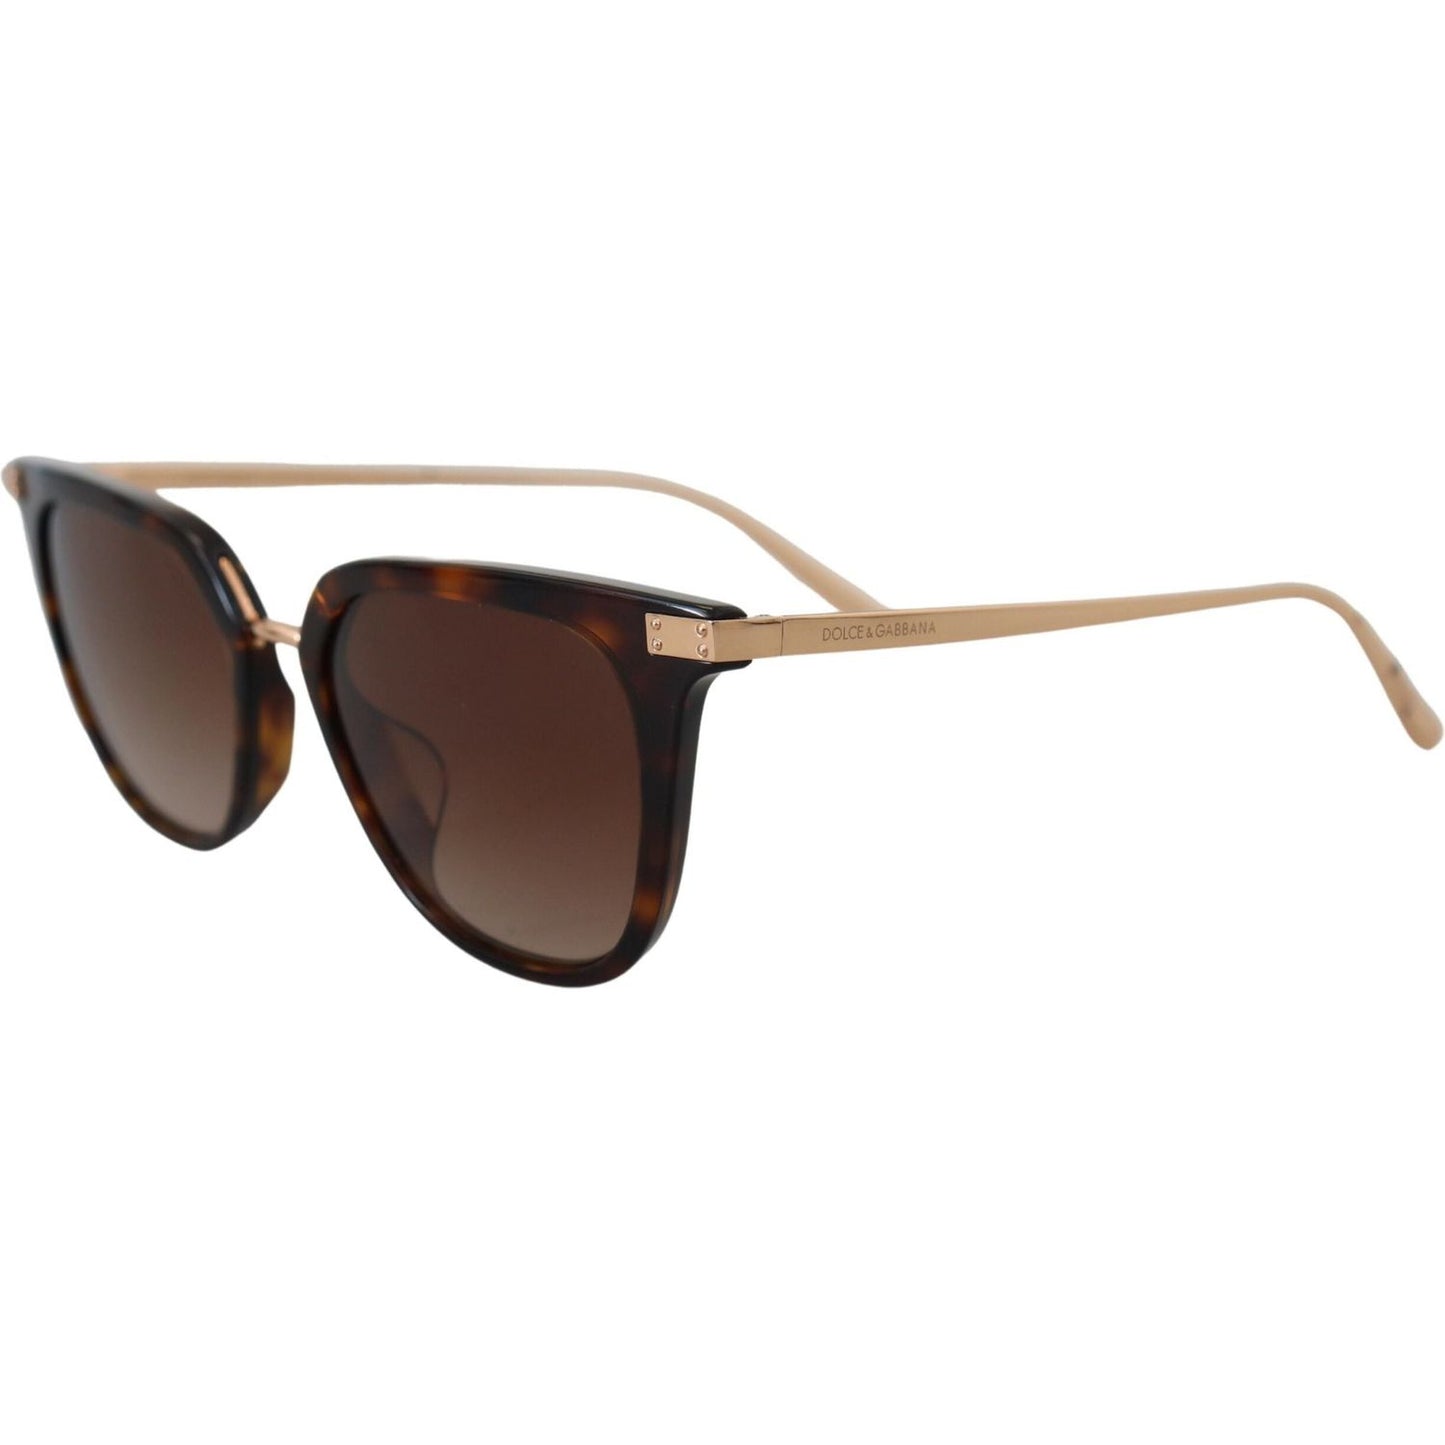 Dolce & Gabbana Irregular Brown Acetate Sunglasses for Women irregular-brown-acetate-sunglasses-for-women